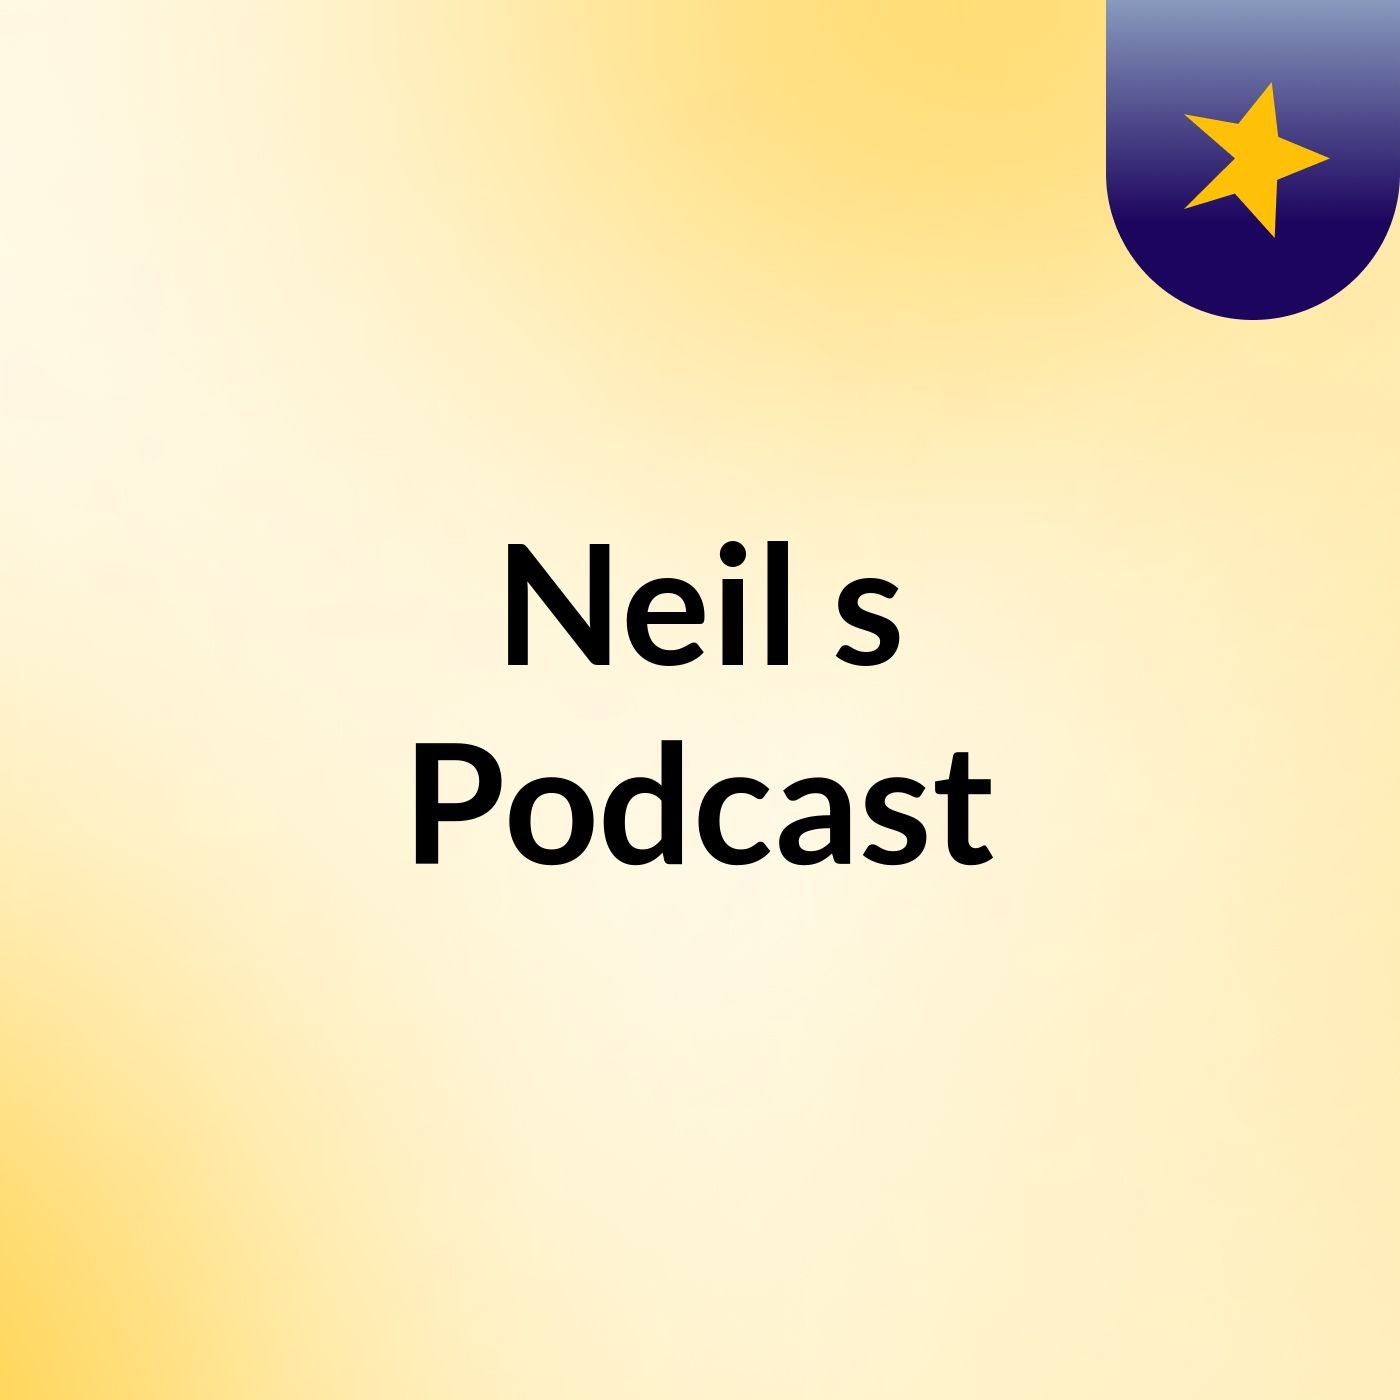 Neil's Podcast